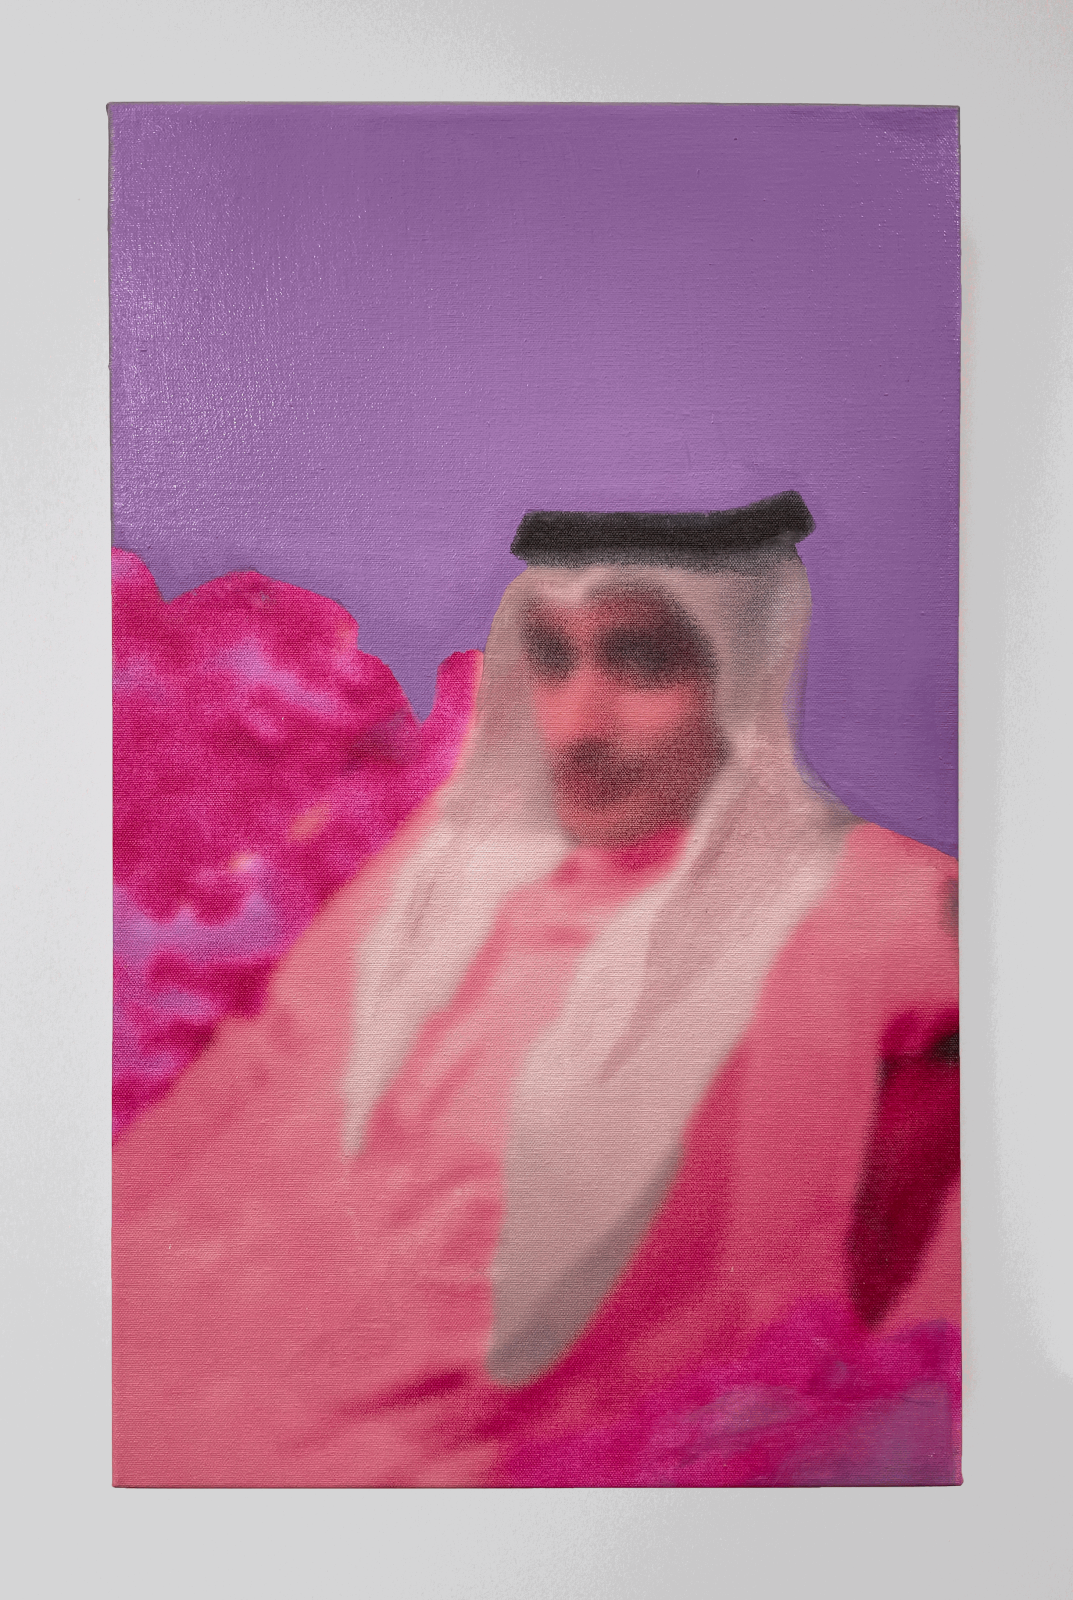 Hawazin Al-Otaibi, Dreamy, Experimental printmaking and acrylic on canvas, 41 x 66 cm